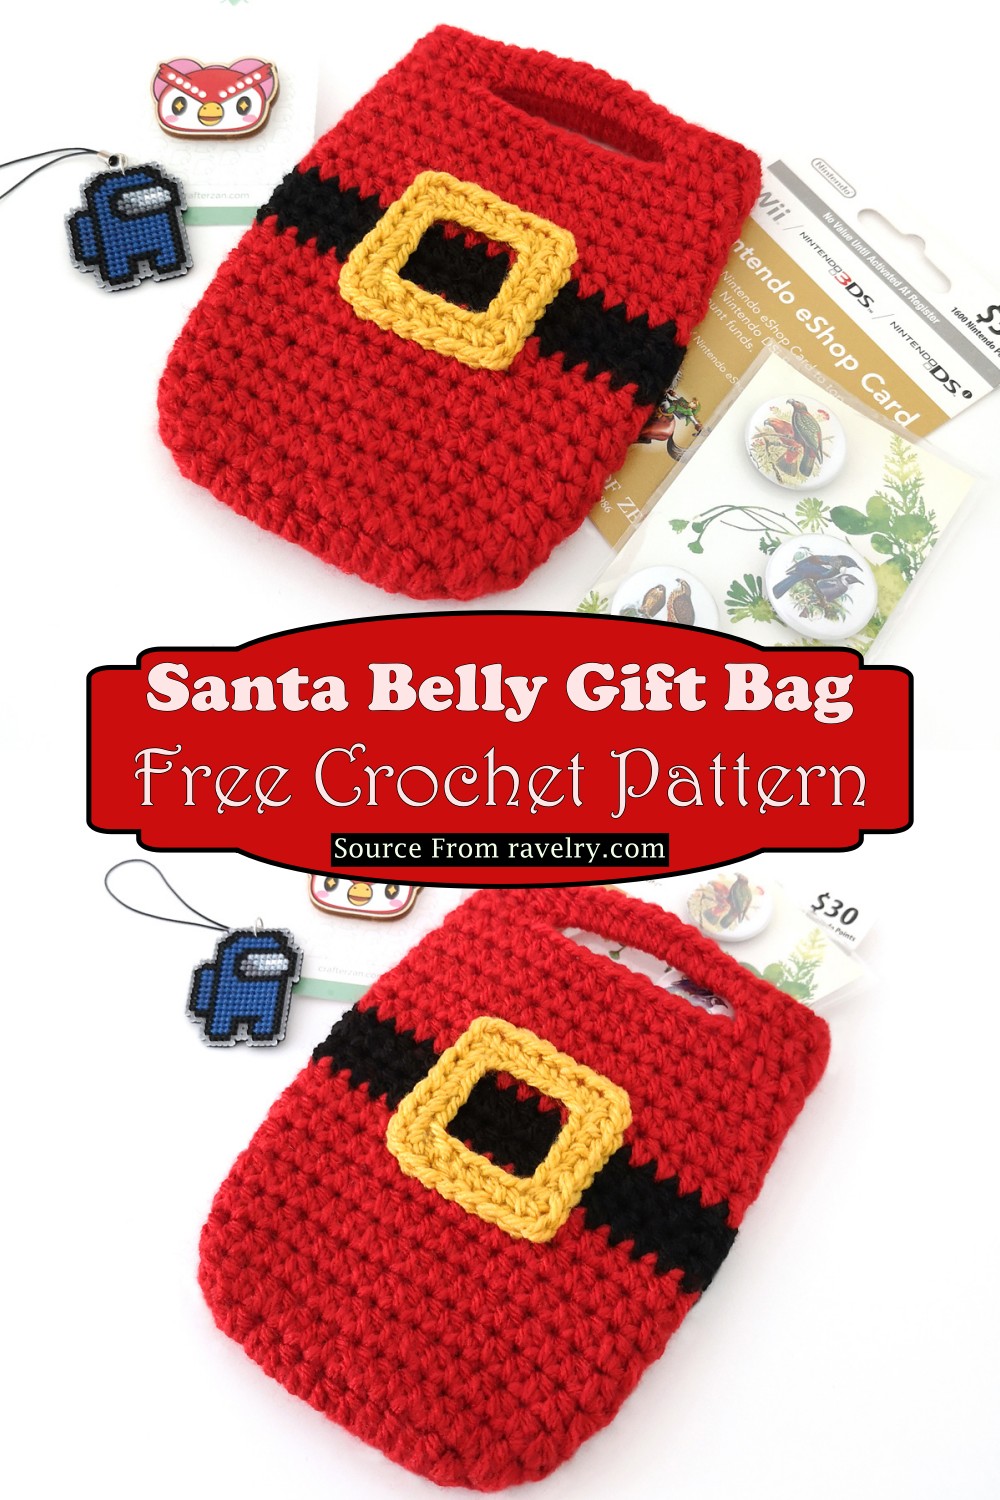 Santa Belly Gift Bag